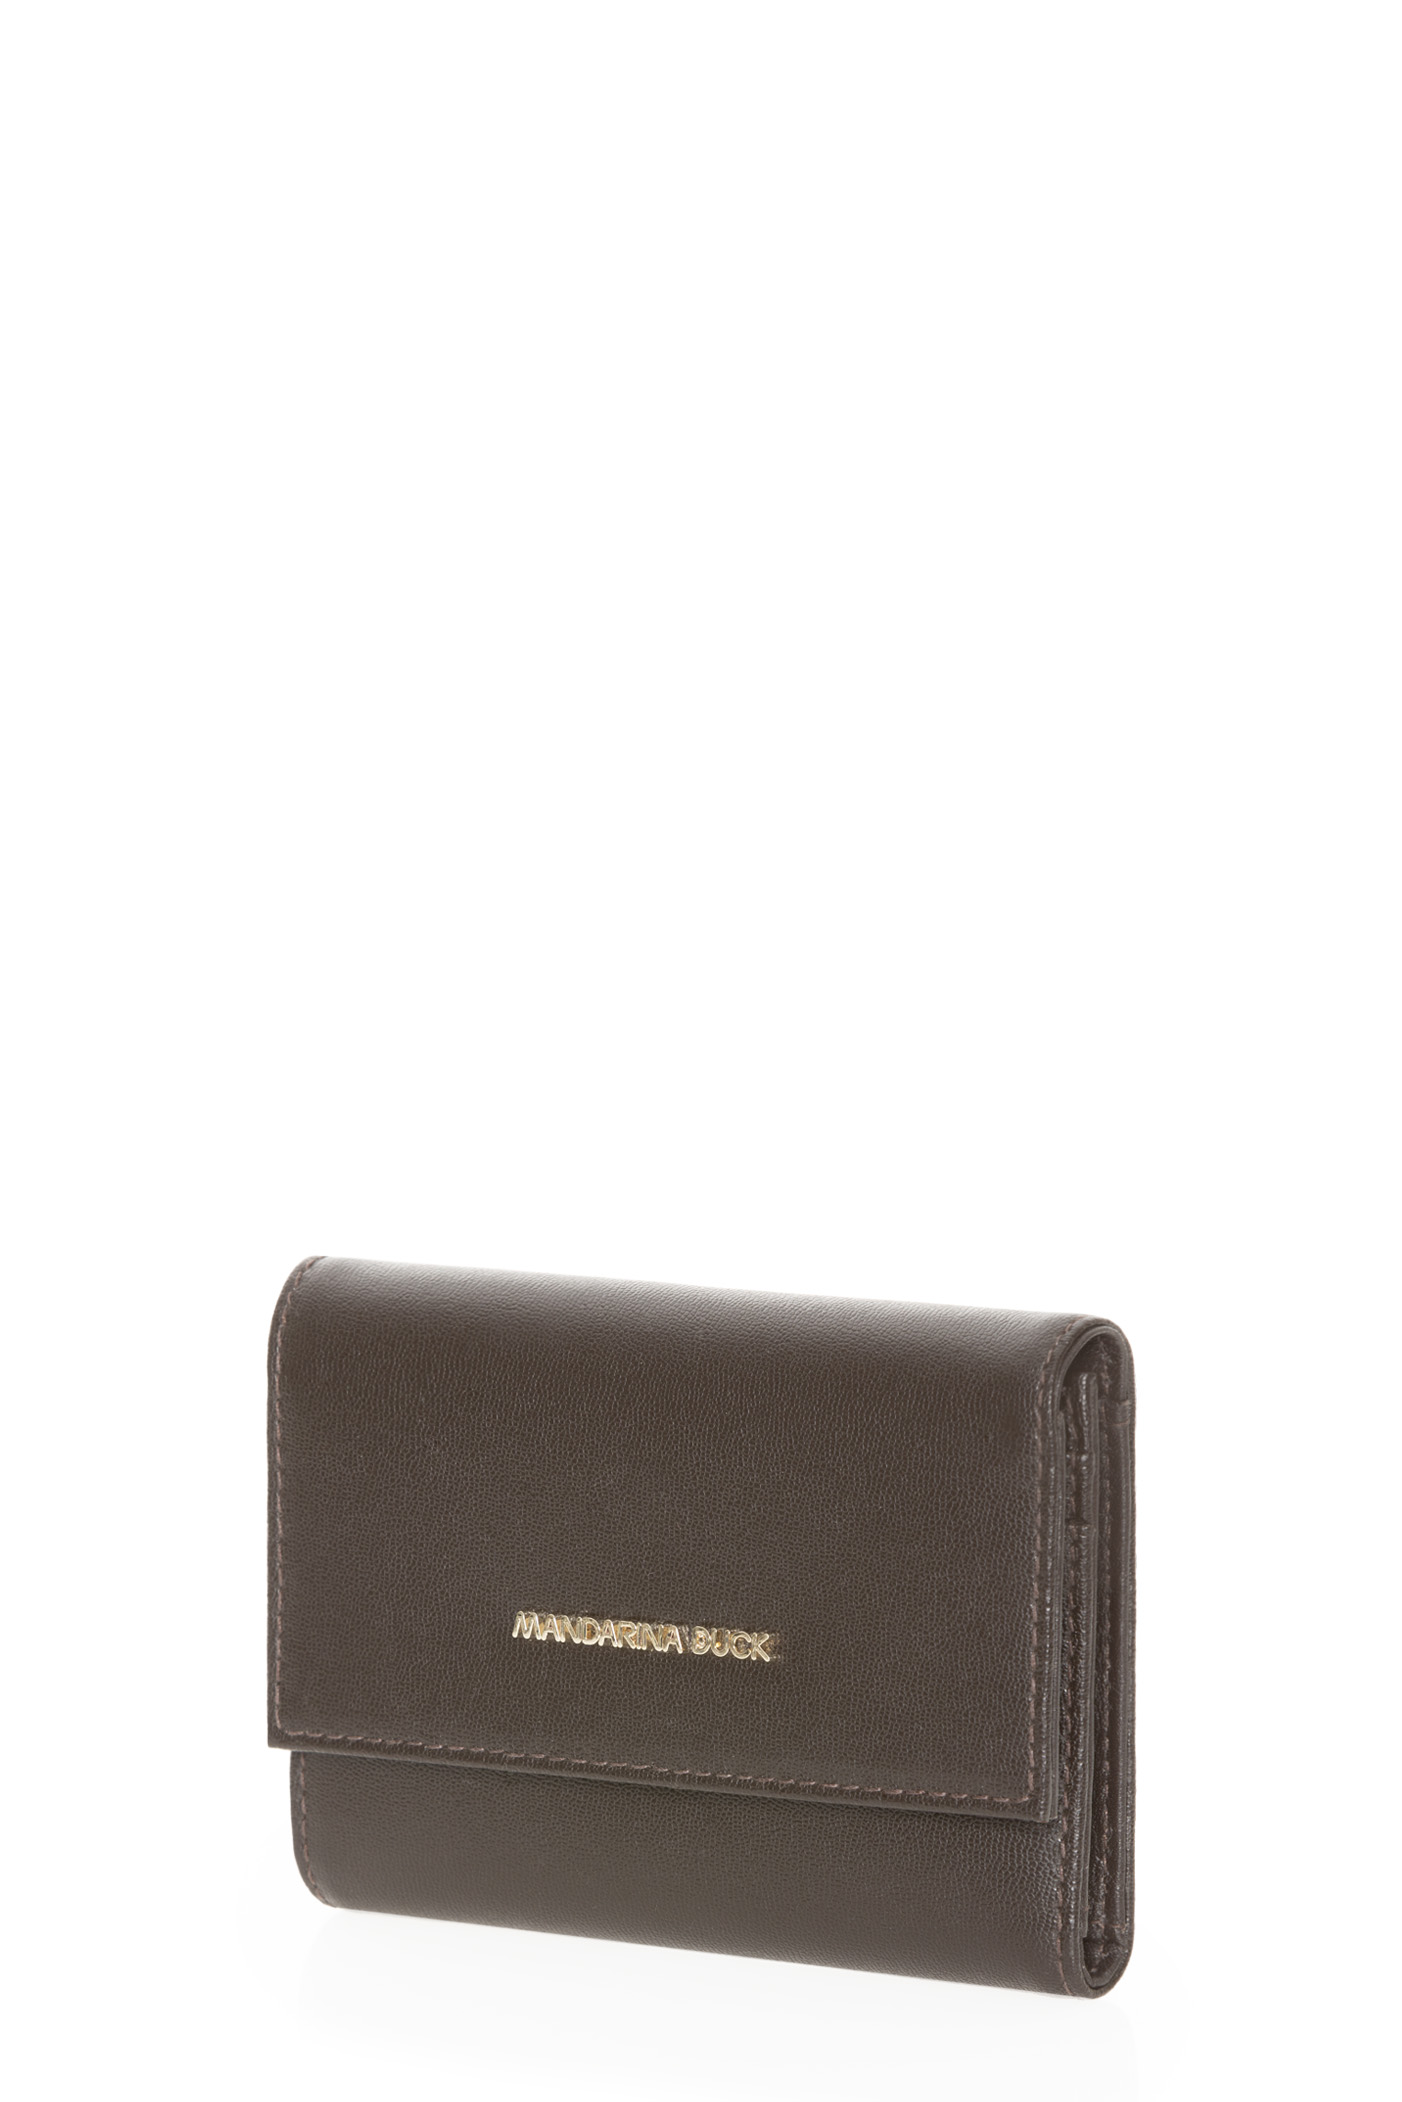 Mandarina Duck Wallet allover print casual look Bags Wallets 